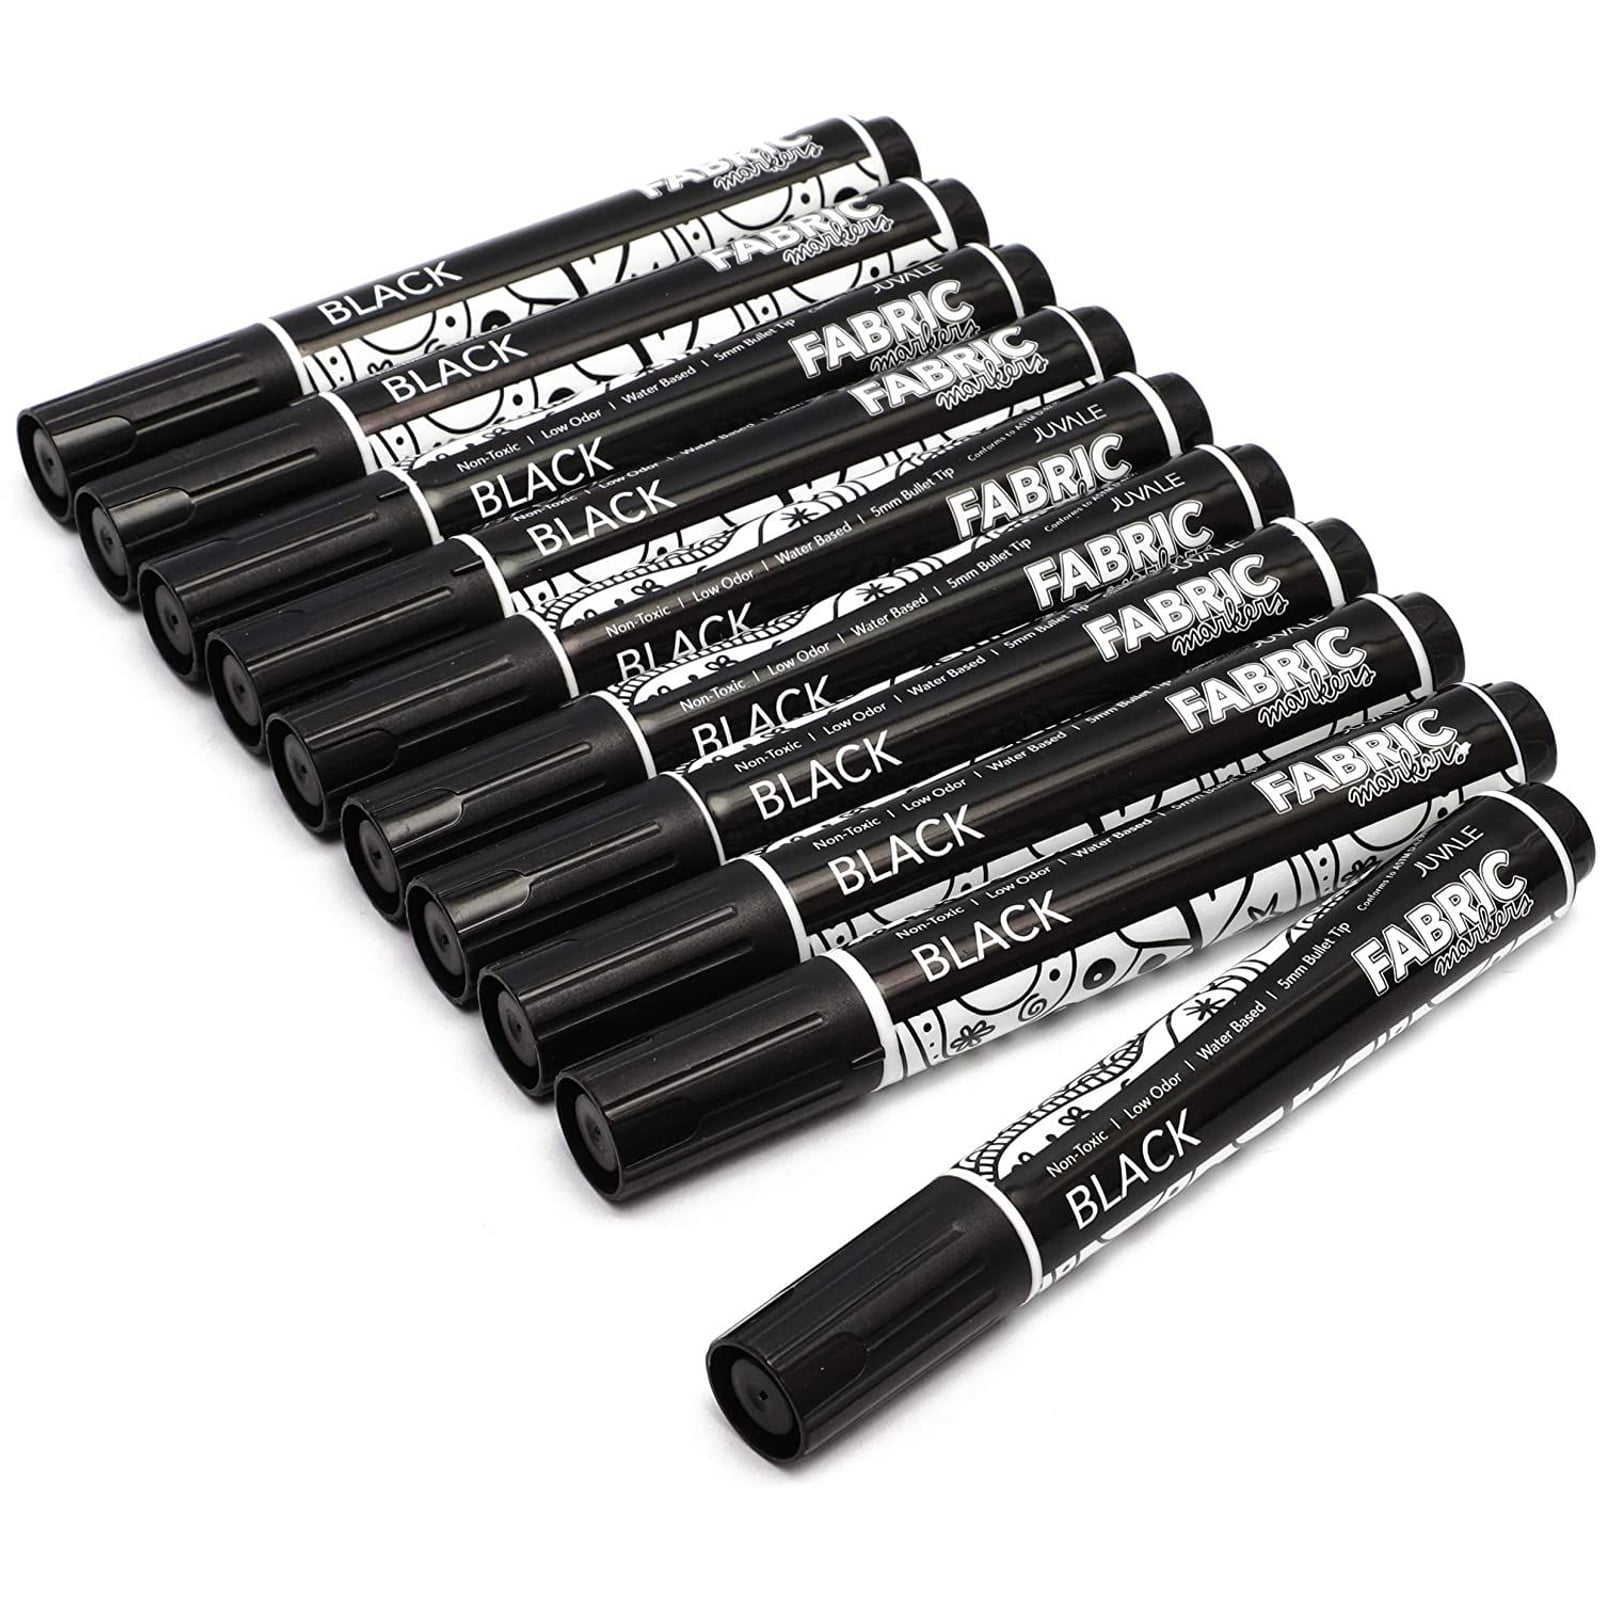 10 x Permanent Black Marker Pens Bullet Tip Pen Waterproof Quality Pen 